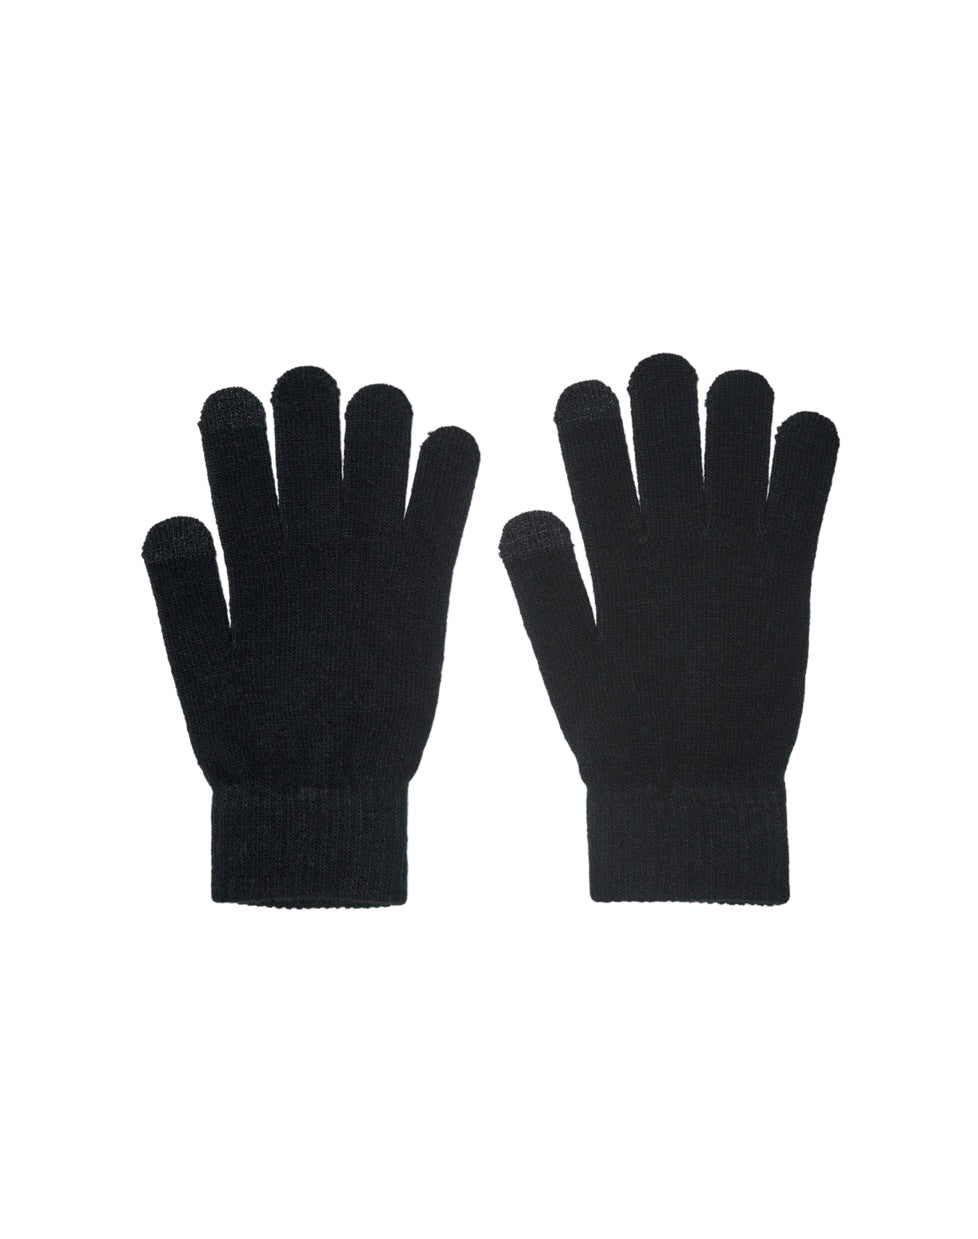 Laline gloves